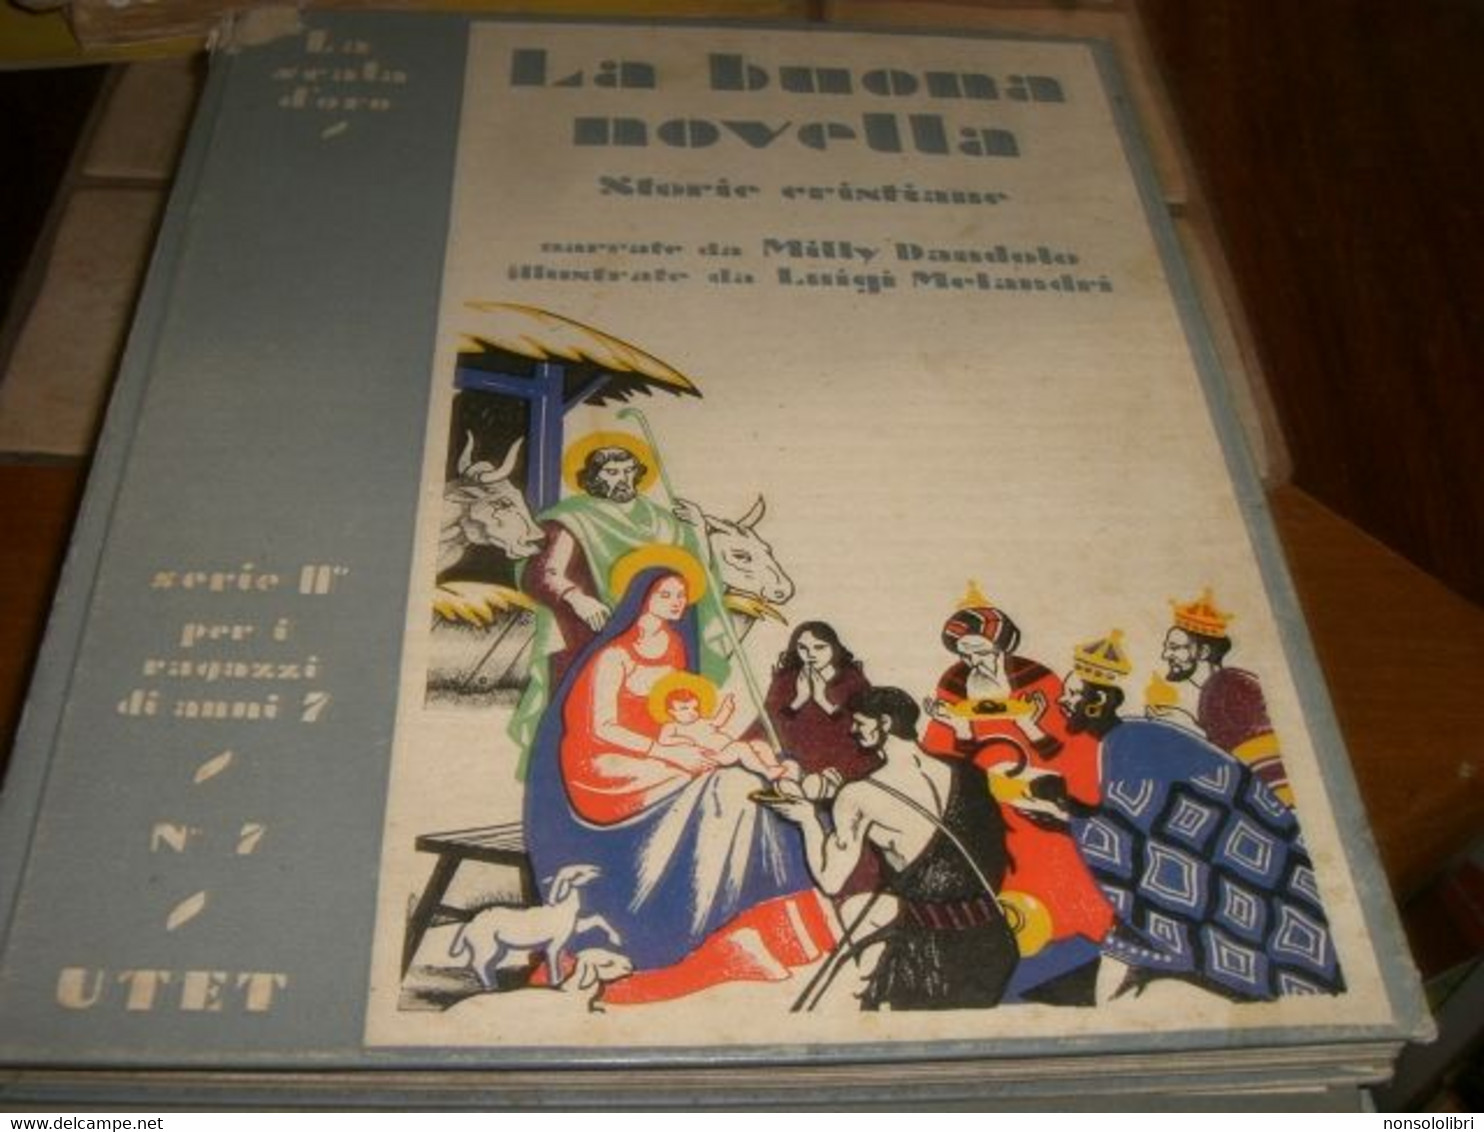 LIBRO "LA BUONA NOVELLA " SCALA D'ORO-SERIE II N.7 PER I RAGAZZI DI ANNI 7-ILLMELANDRI 1933 -COPERTINA RIGIDA - Erzählungen, Kurzgeschichten